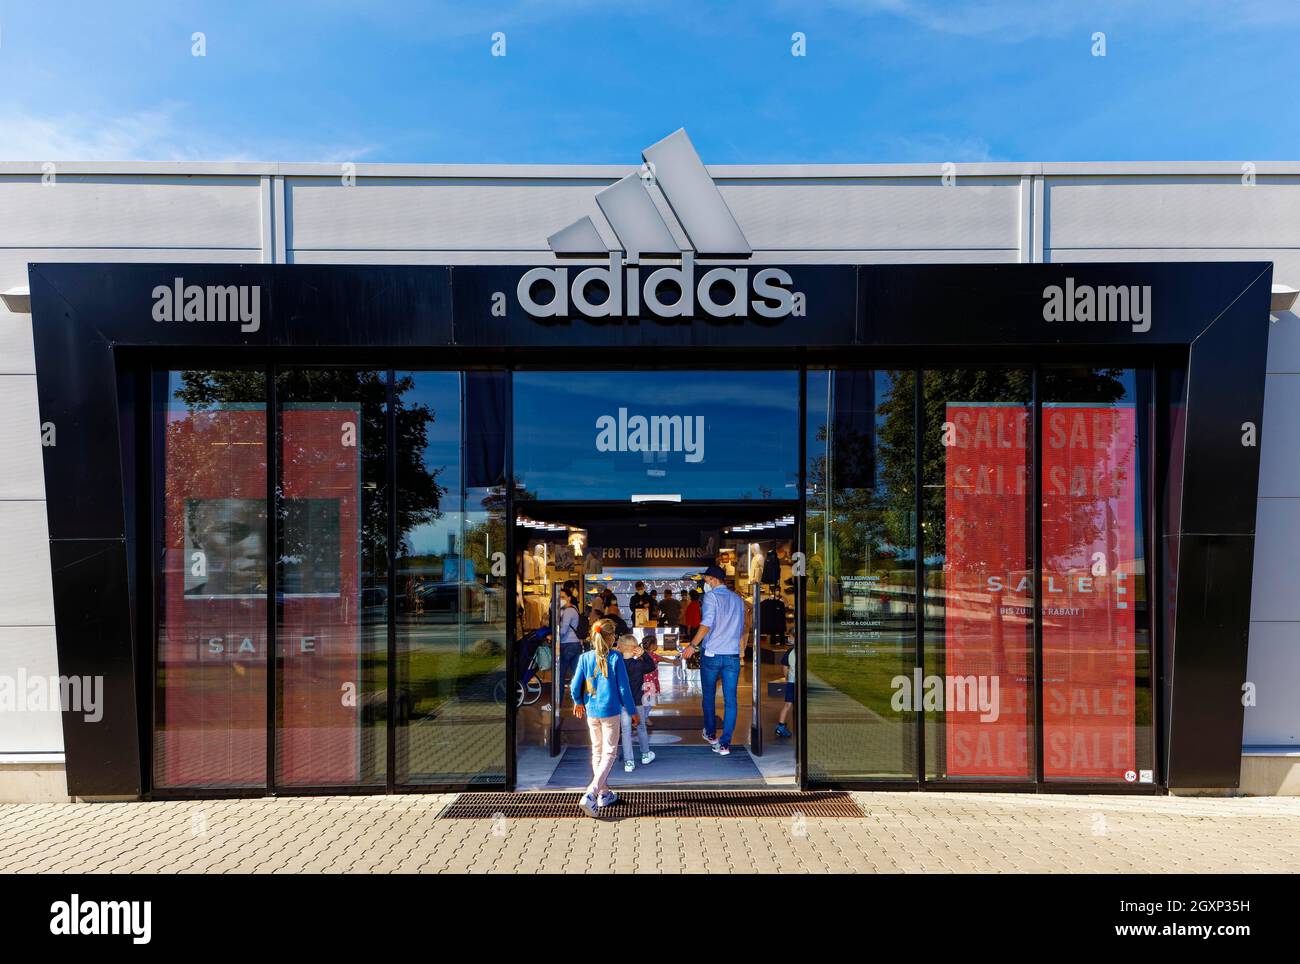 Adidas factory outlet -Fotos und -Bildmaterial in hoher Auflösung – Alamy